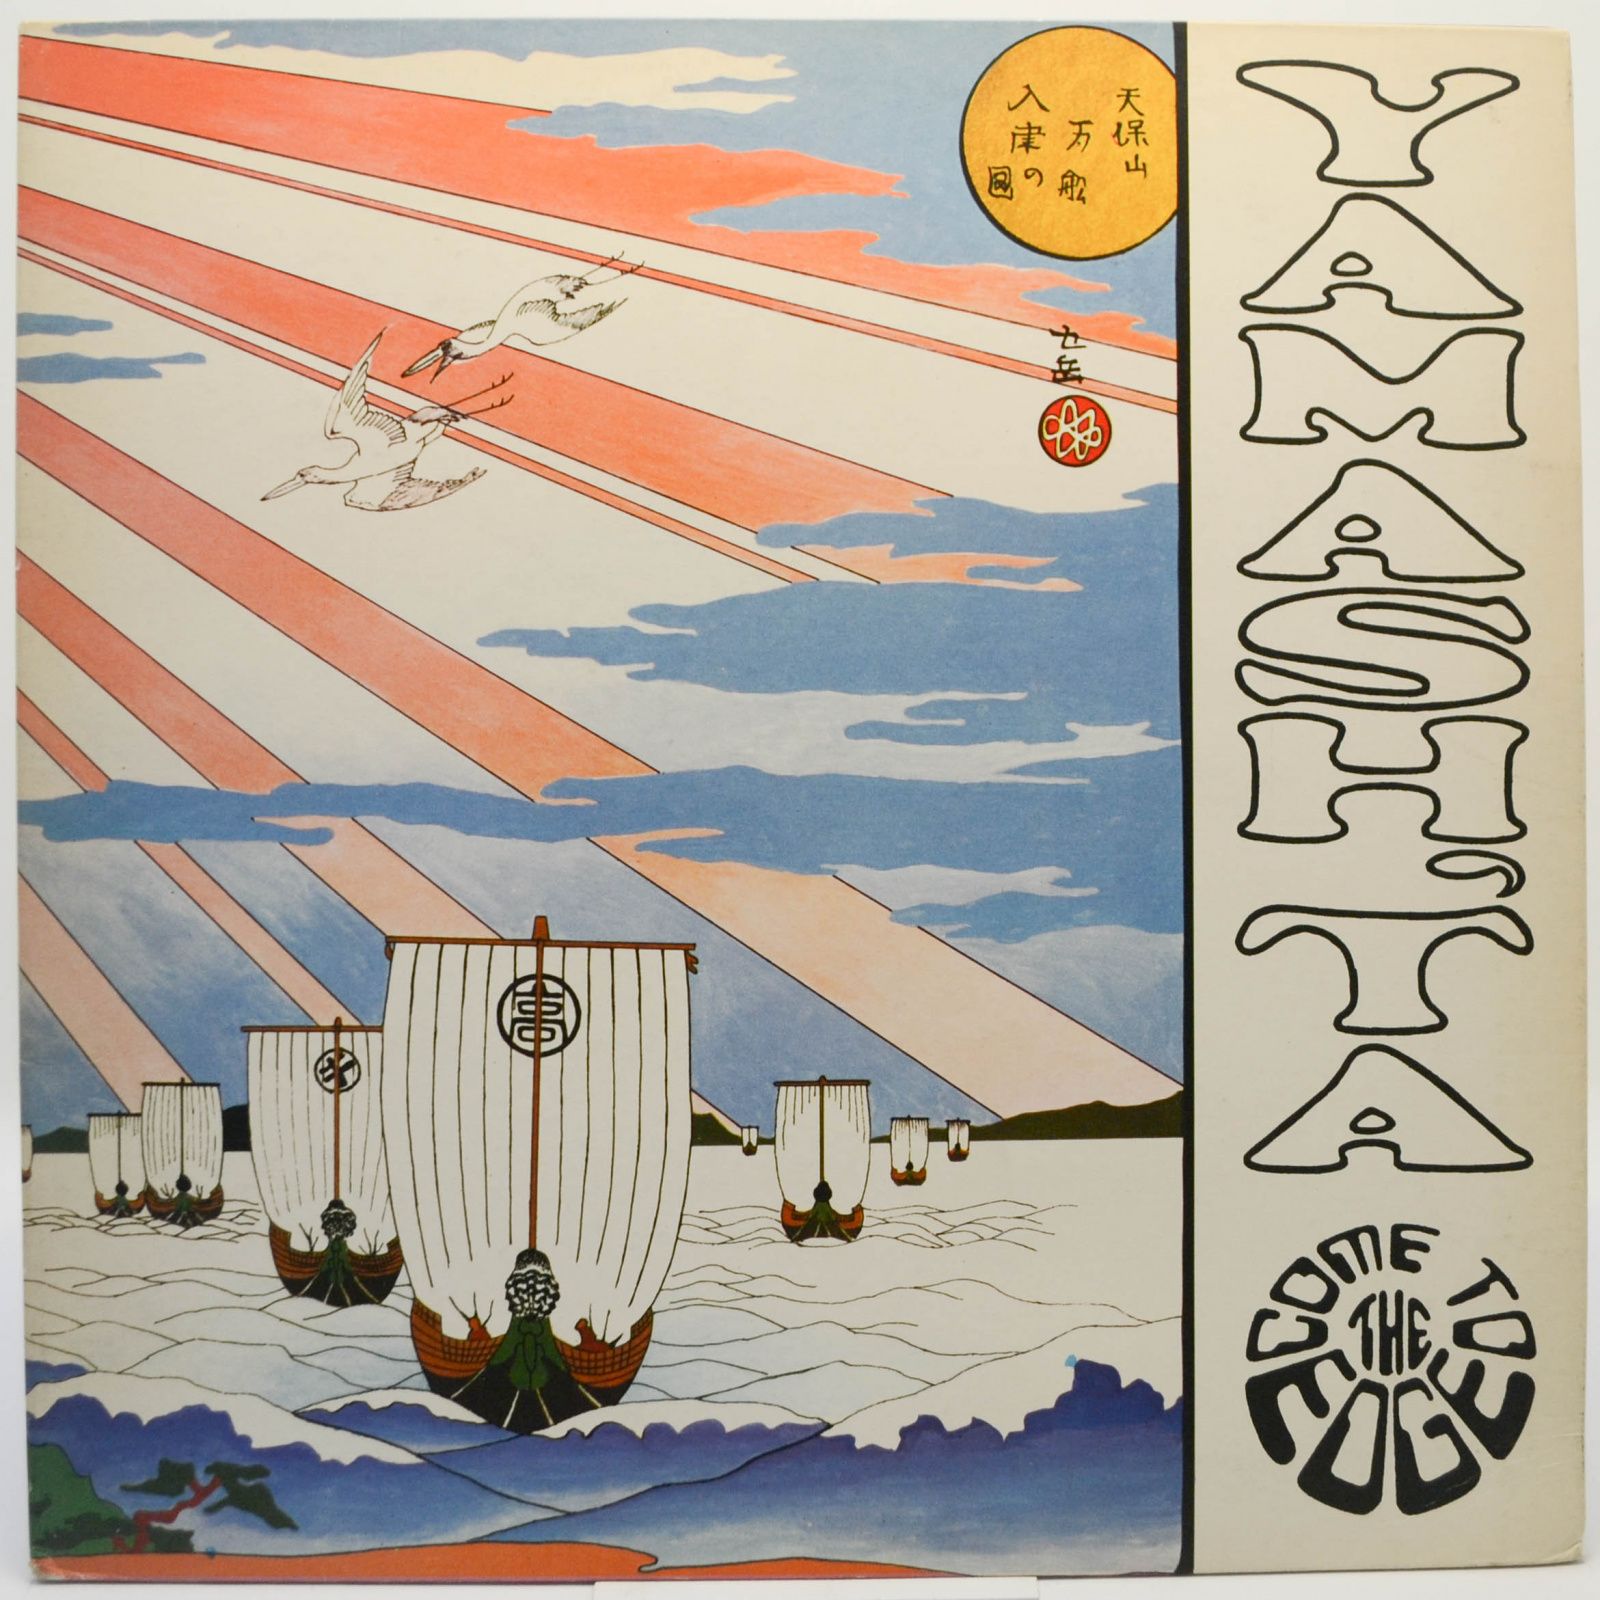 Stomu Yamash'ta, Come To The Edge — Floating Music (UK), 1972